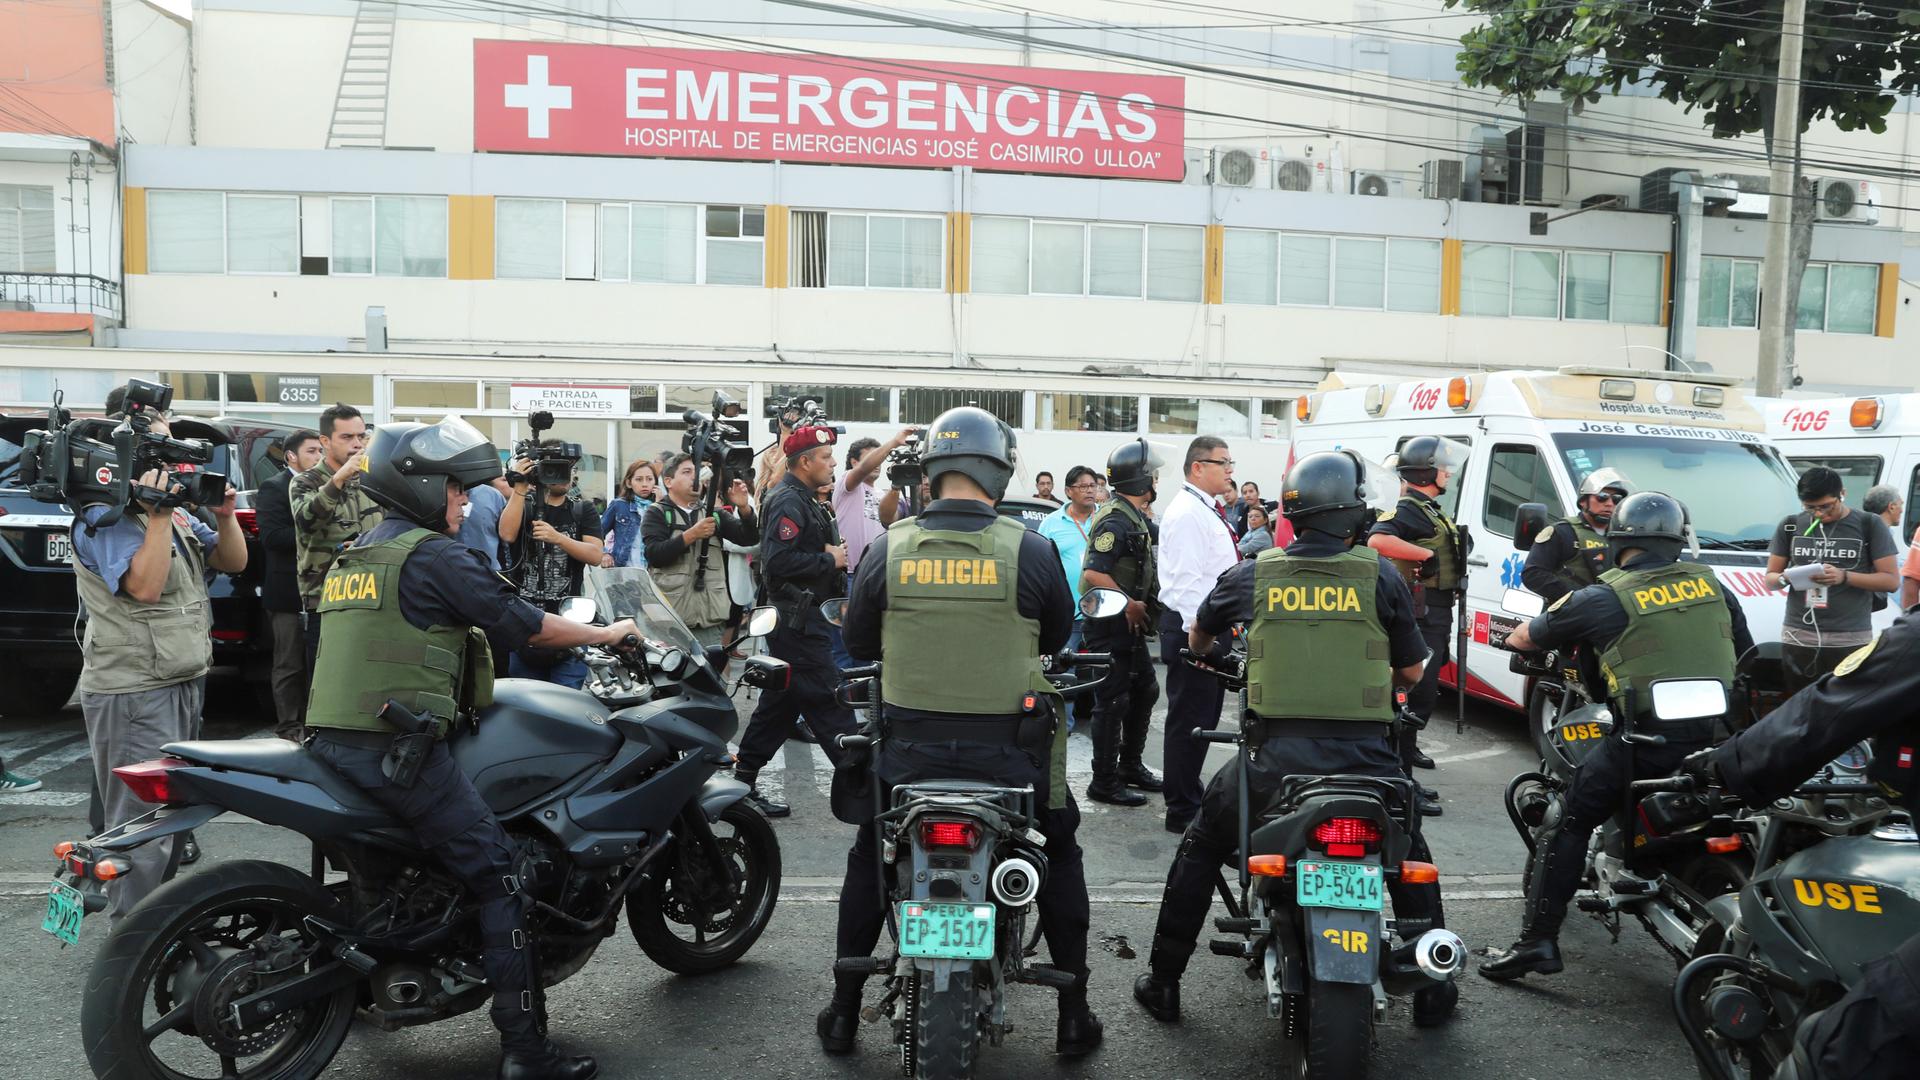 outside a hospital in peru, many police